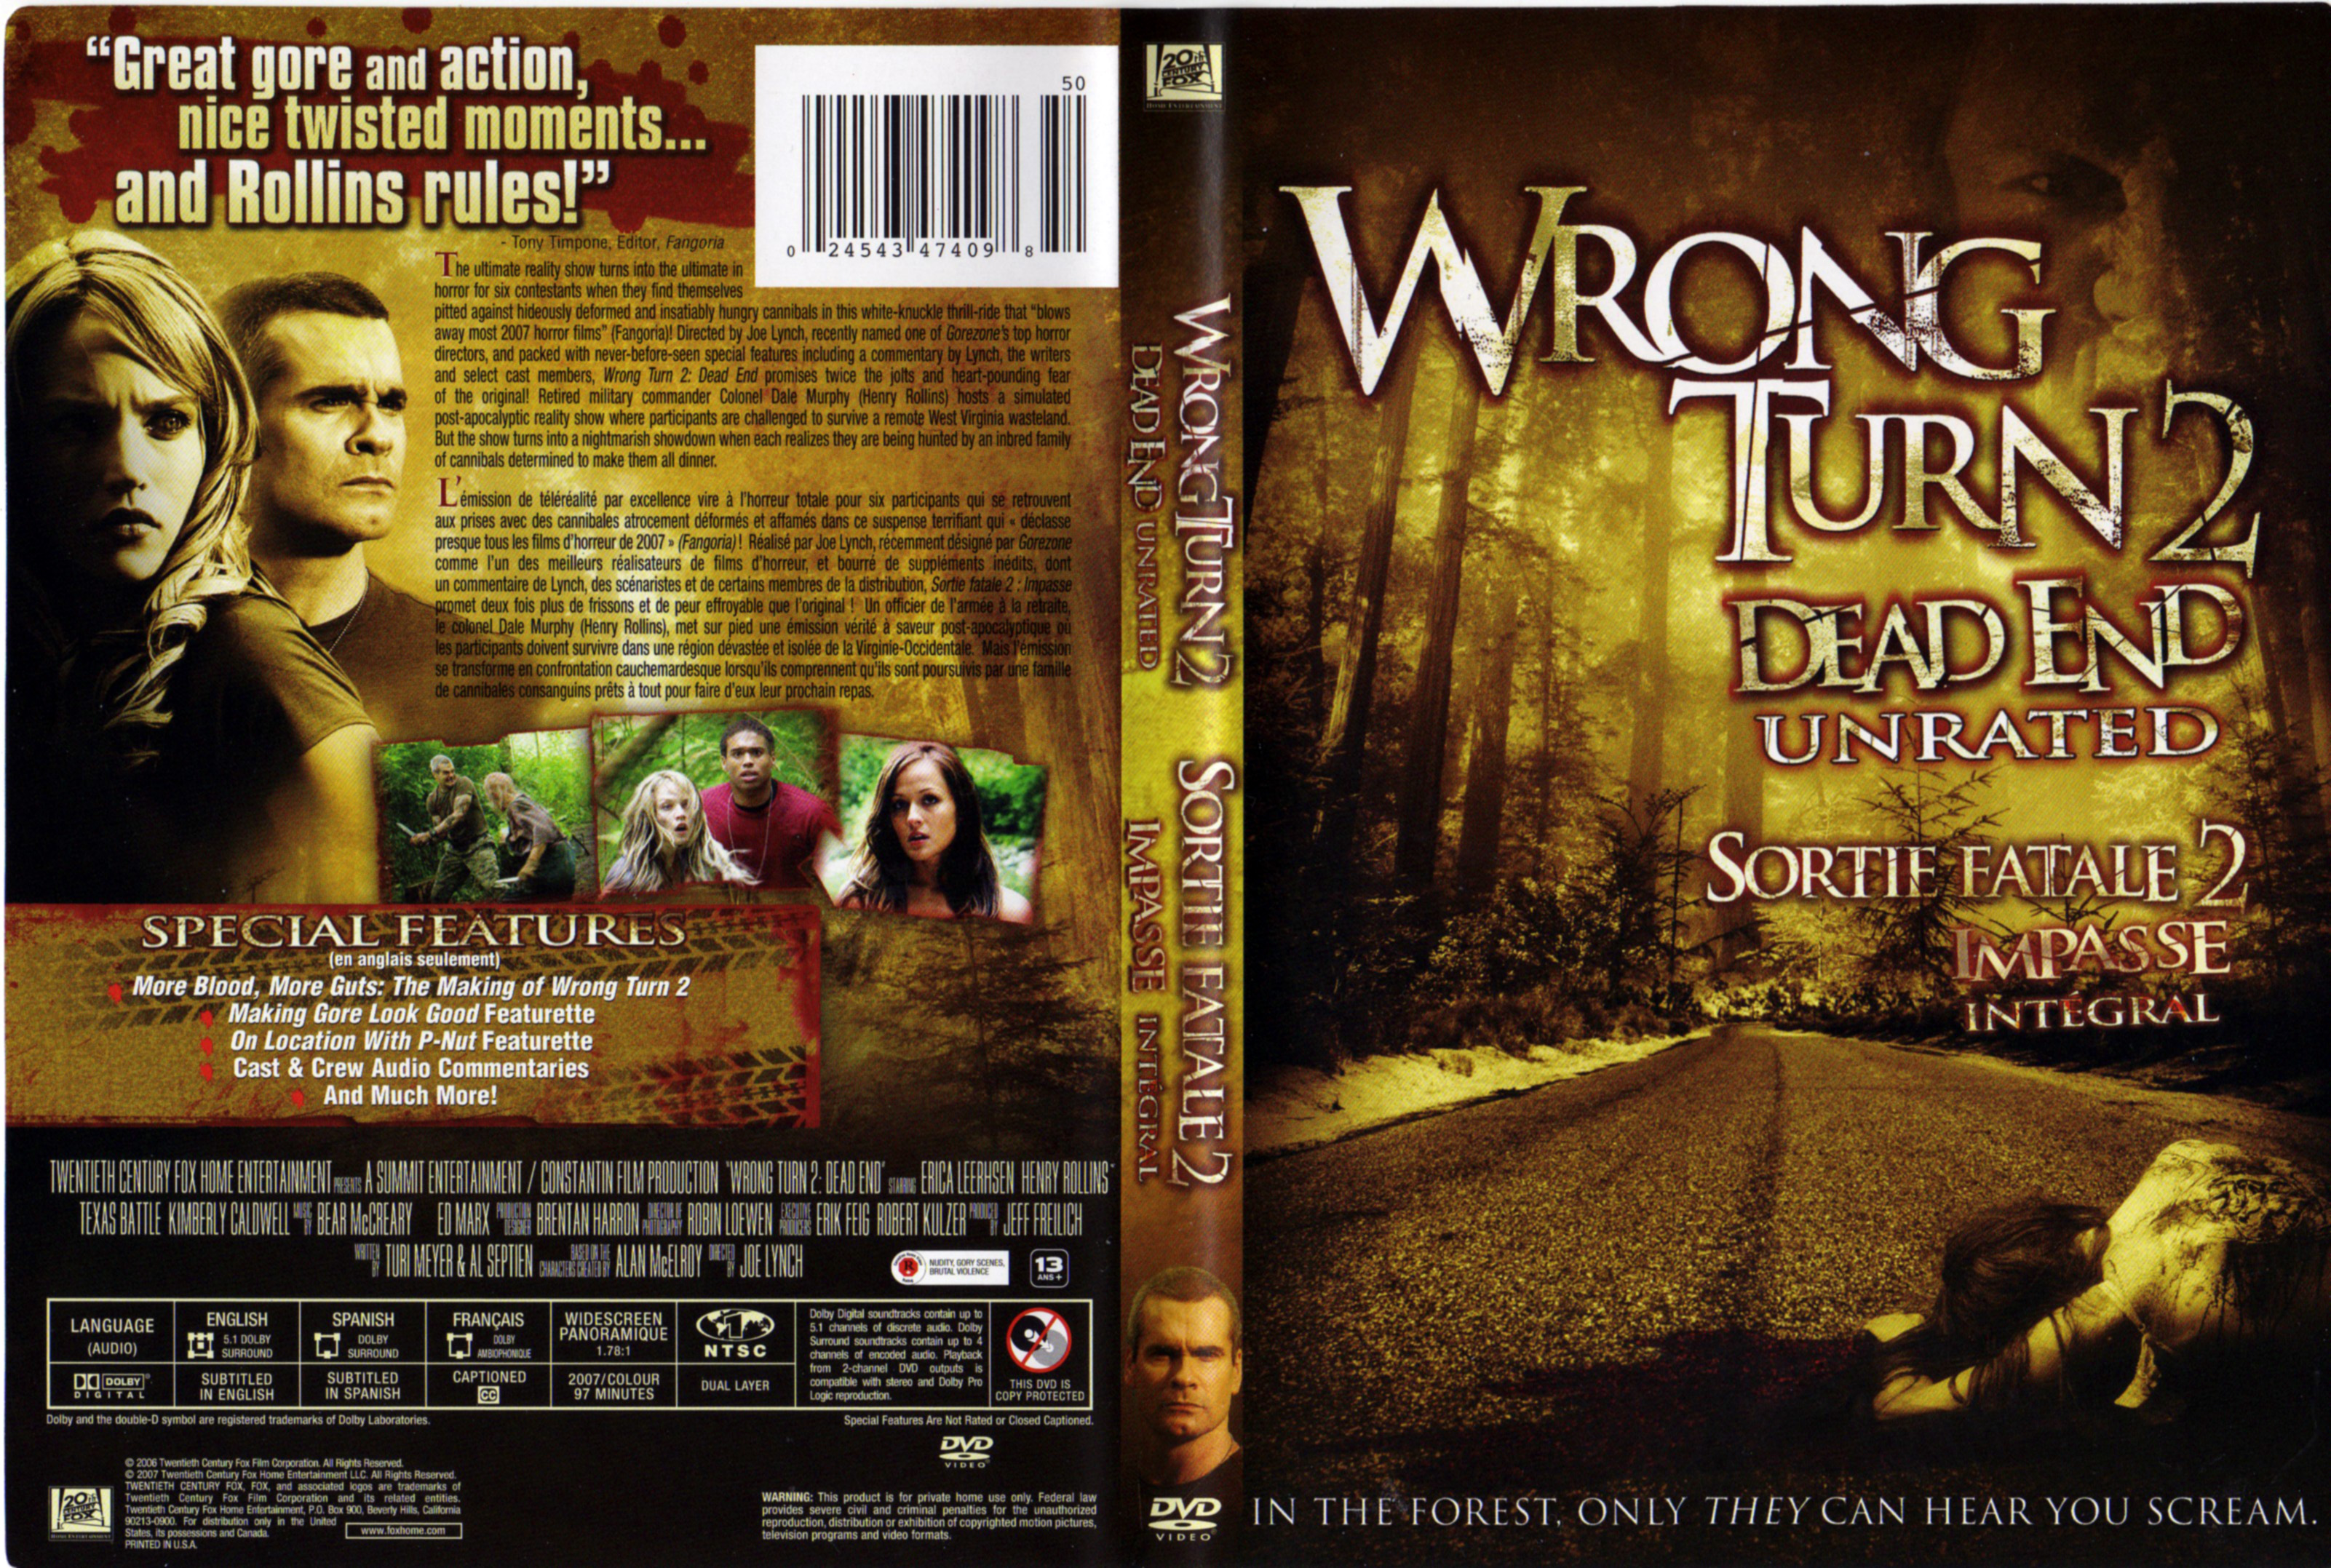 Jaquette DVD Sortie fatale 2 - Wrong turn 2